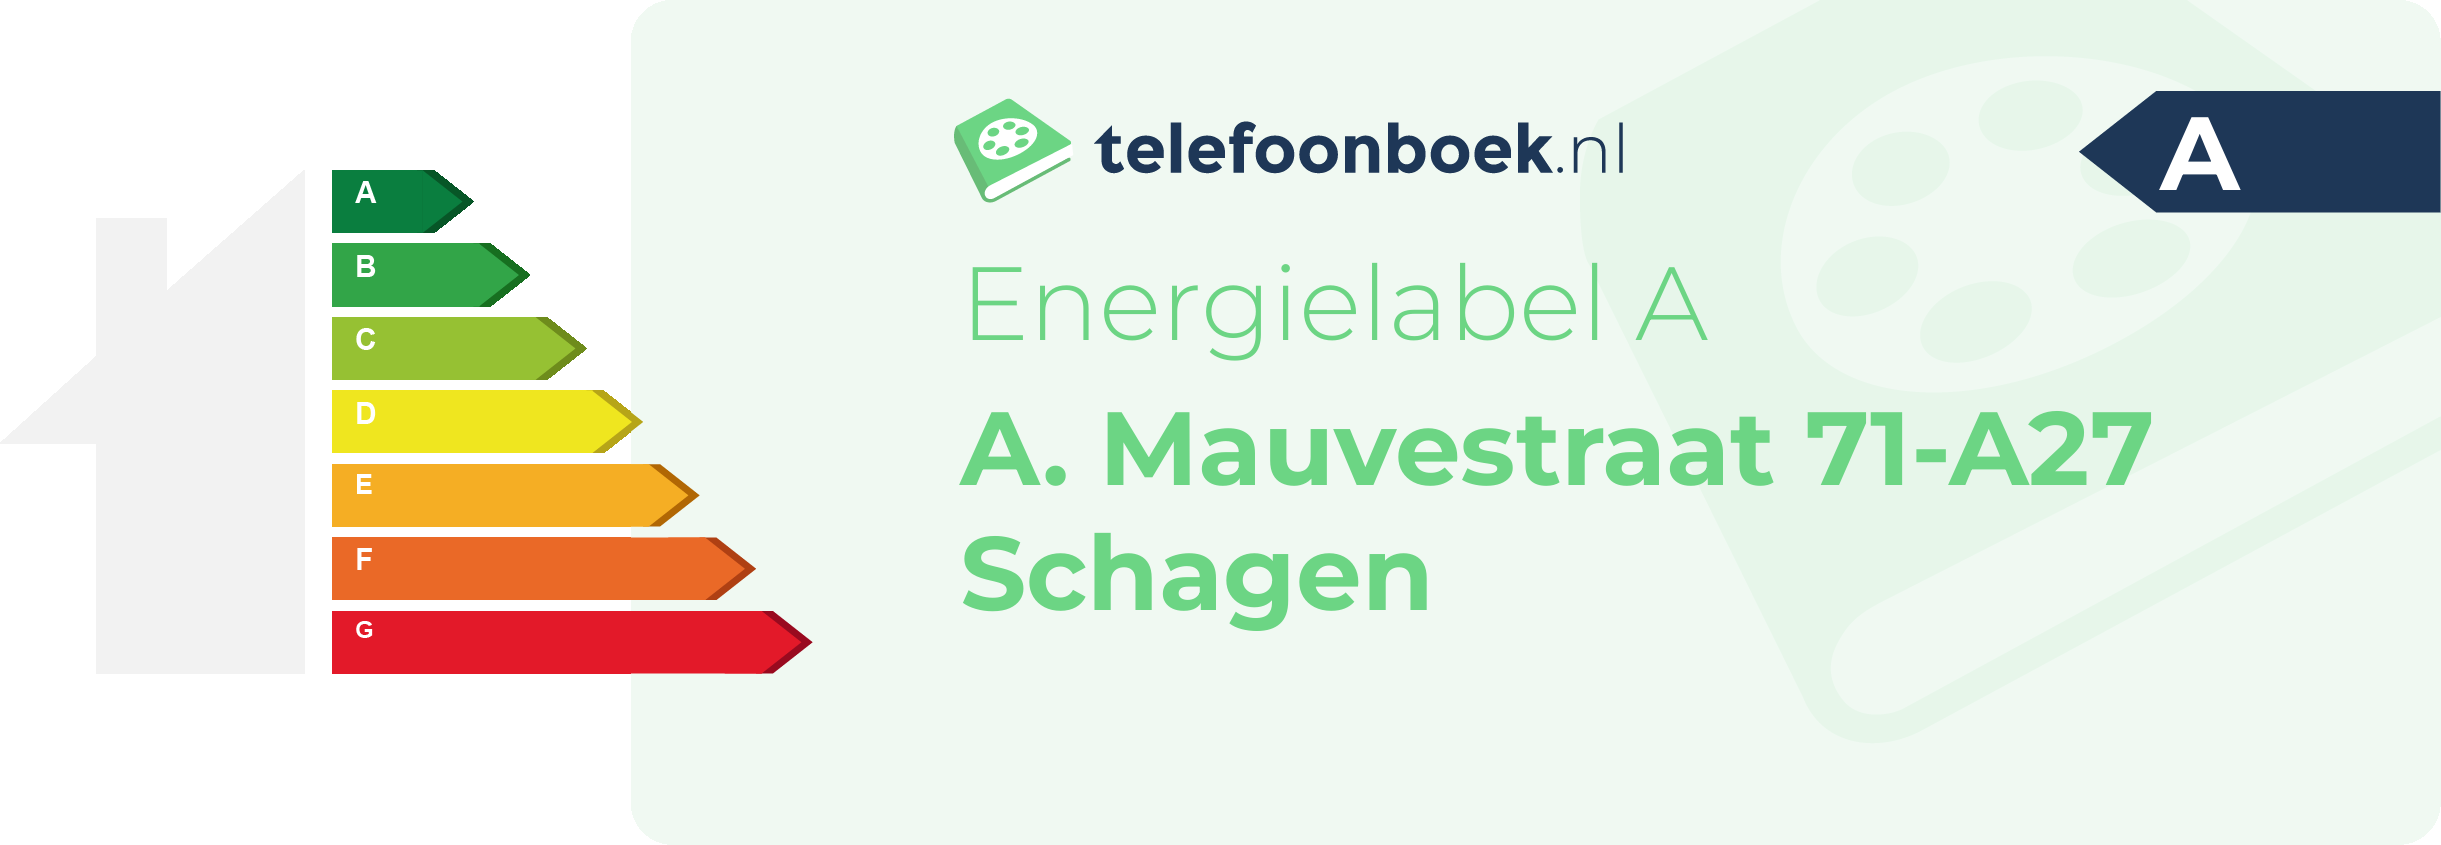 Energielabel A. Mauvestraat 71-A27 Schagen